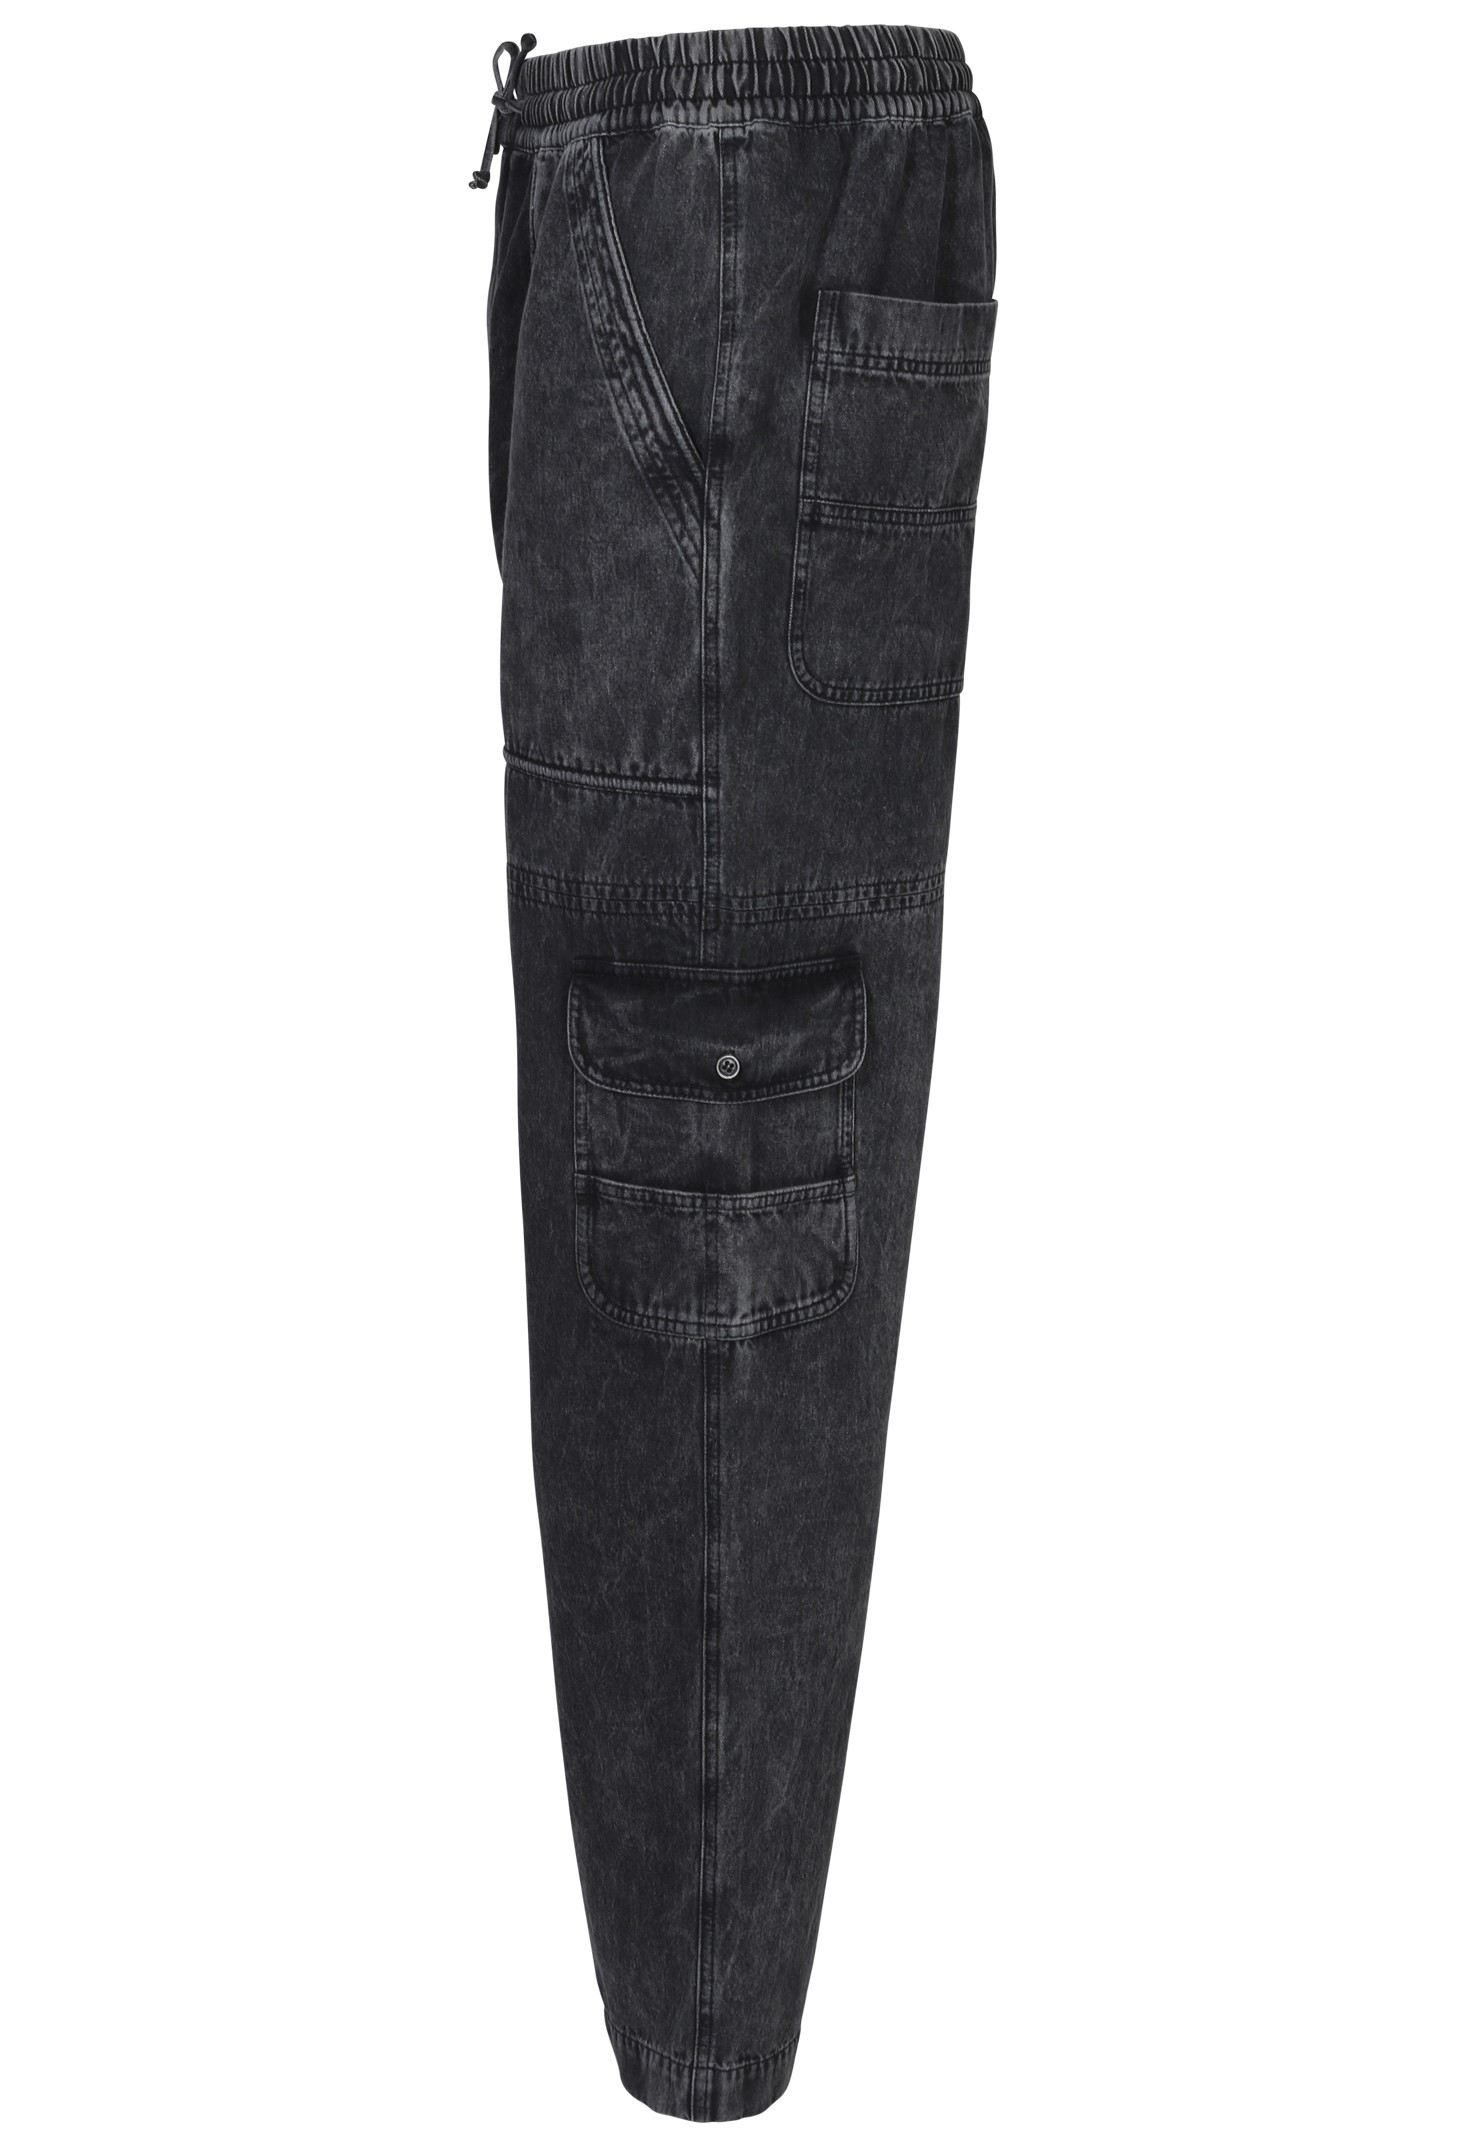 ISABEL MARANT Vanni Pant in Faded Black XL